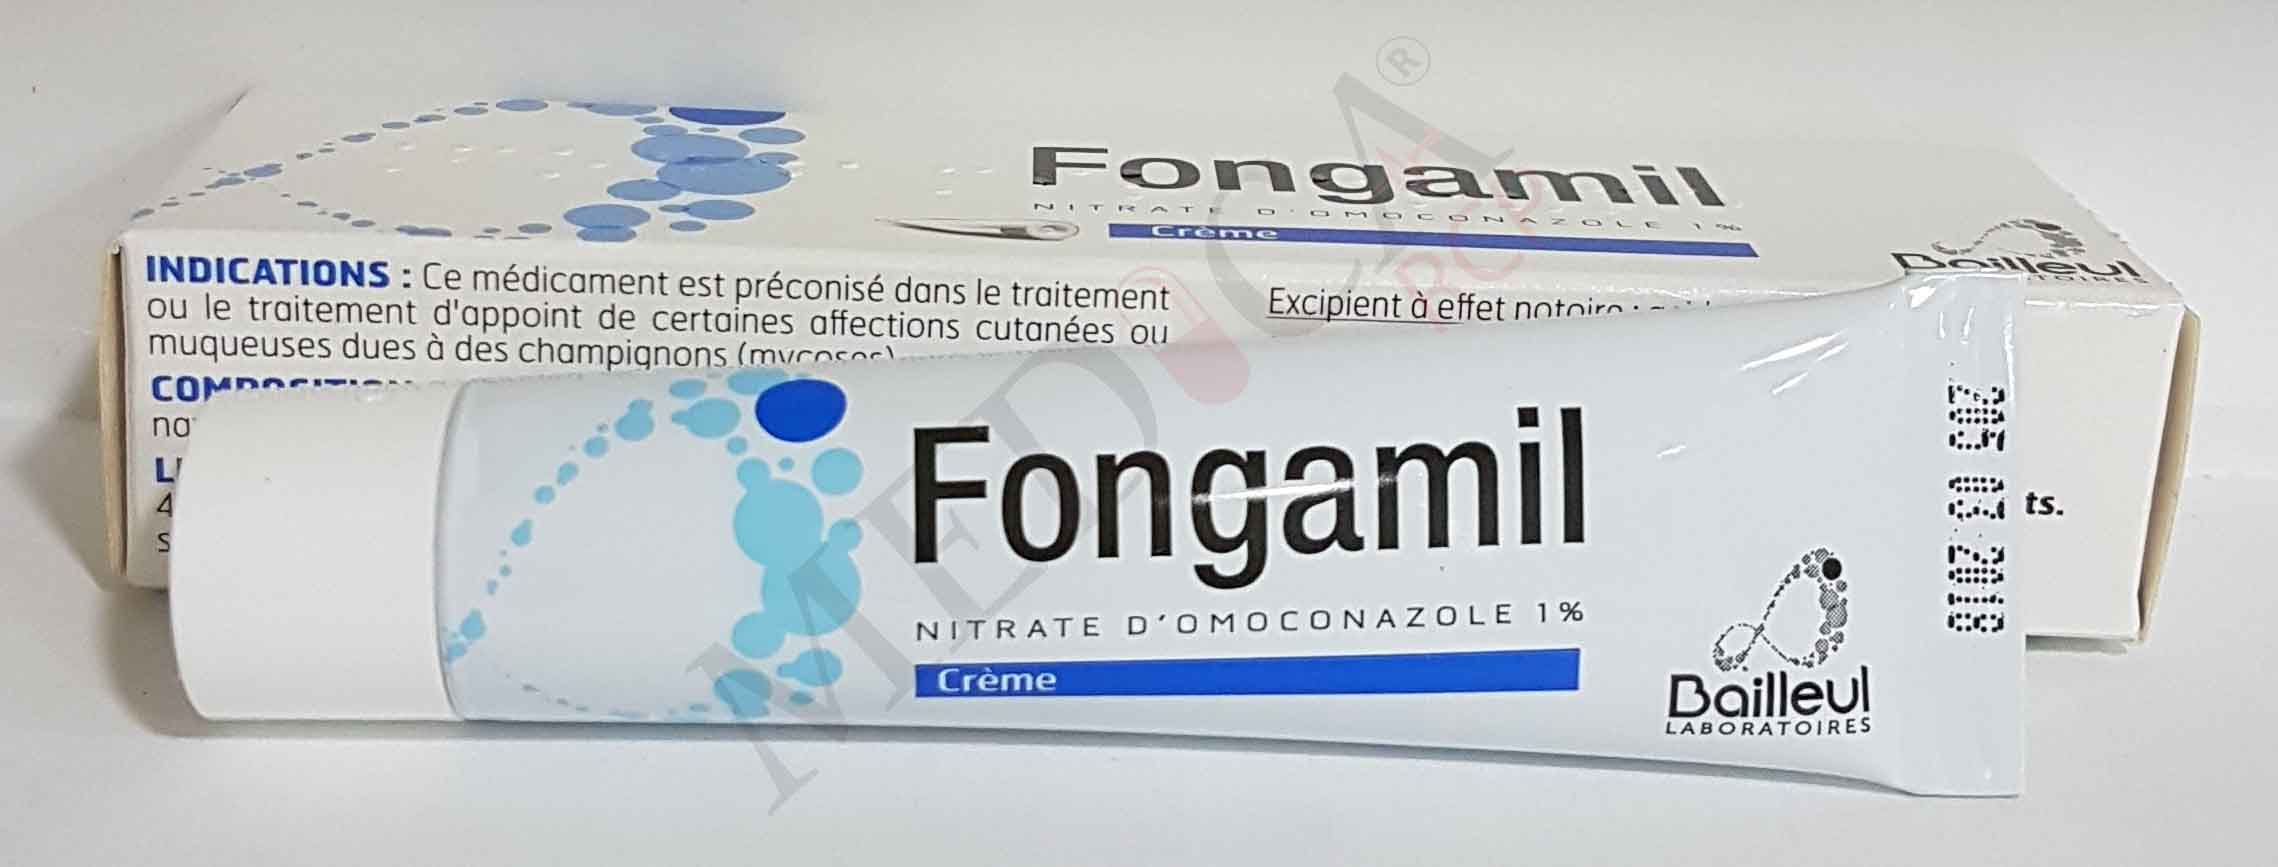 Fongamil Crème